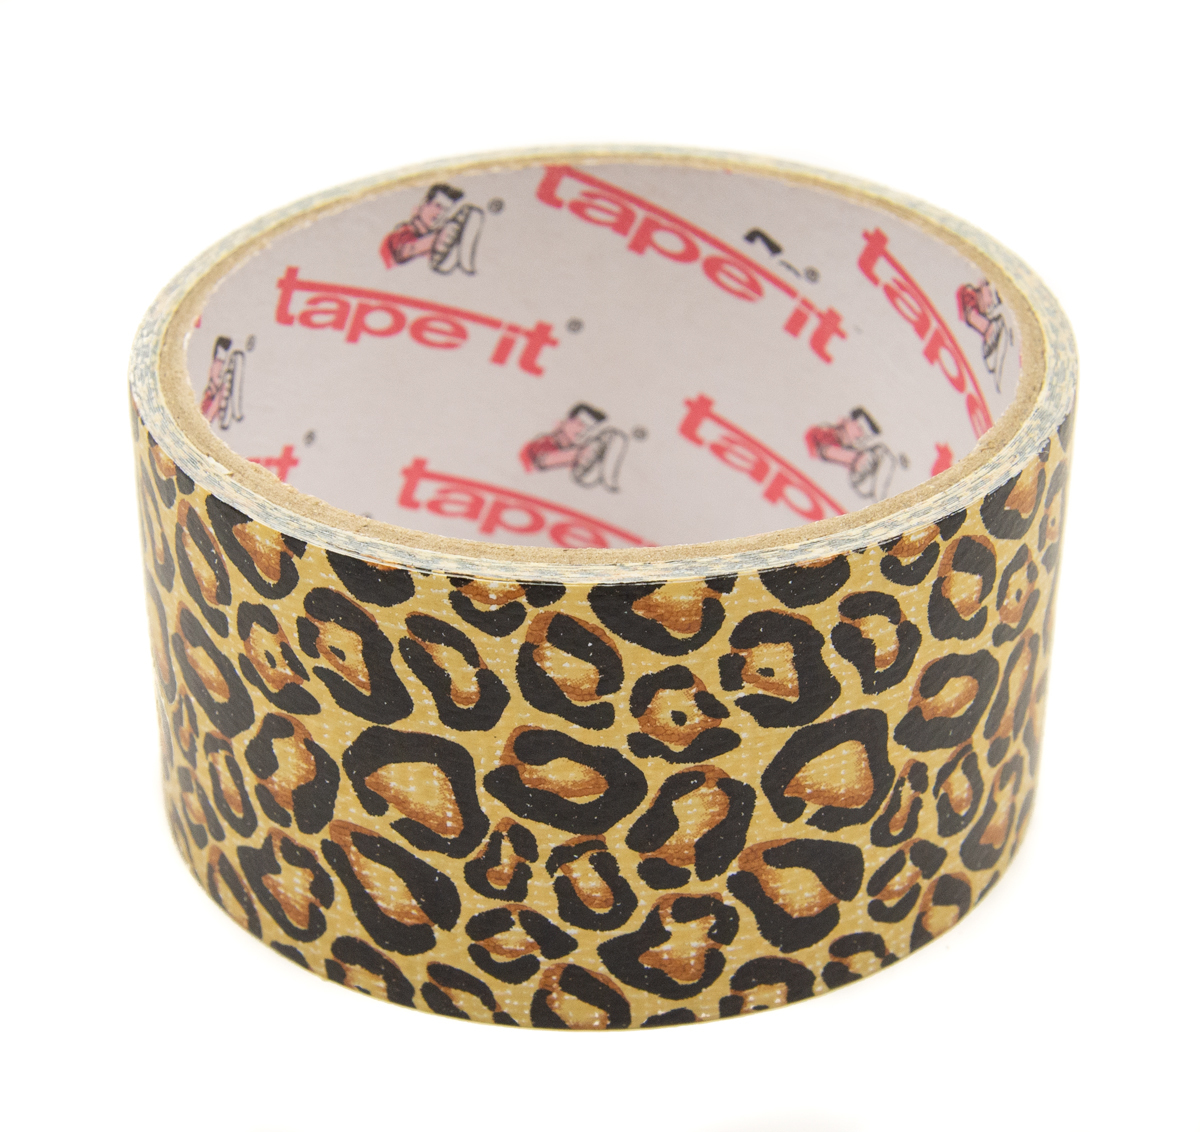 Wholesale Duct Tape - Cheetah Design, 1.89 x 10 yards